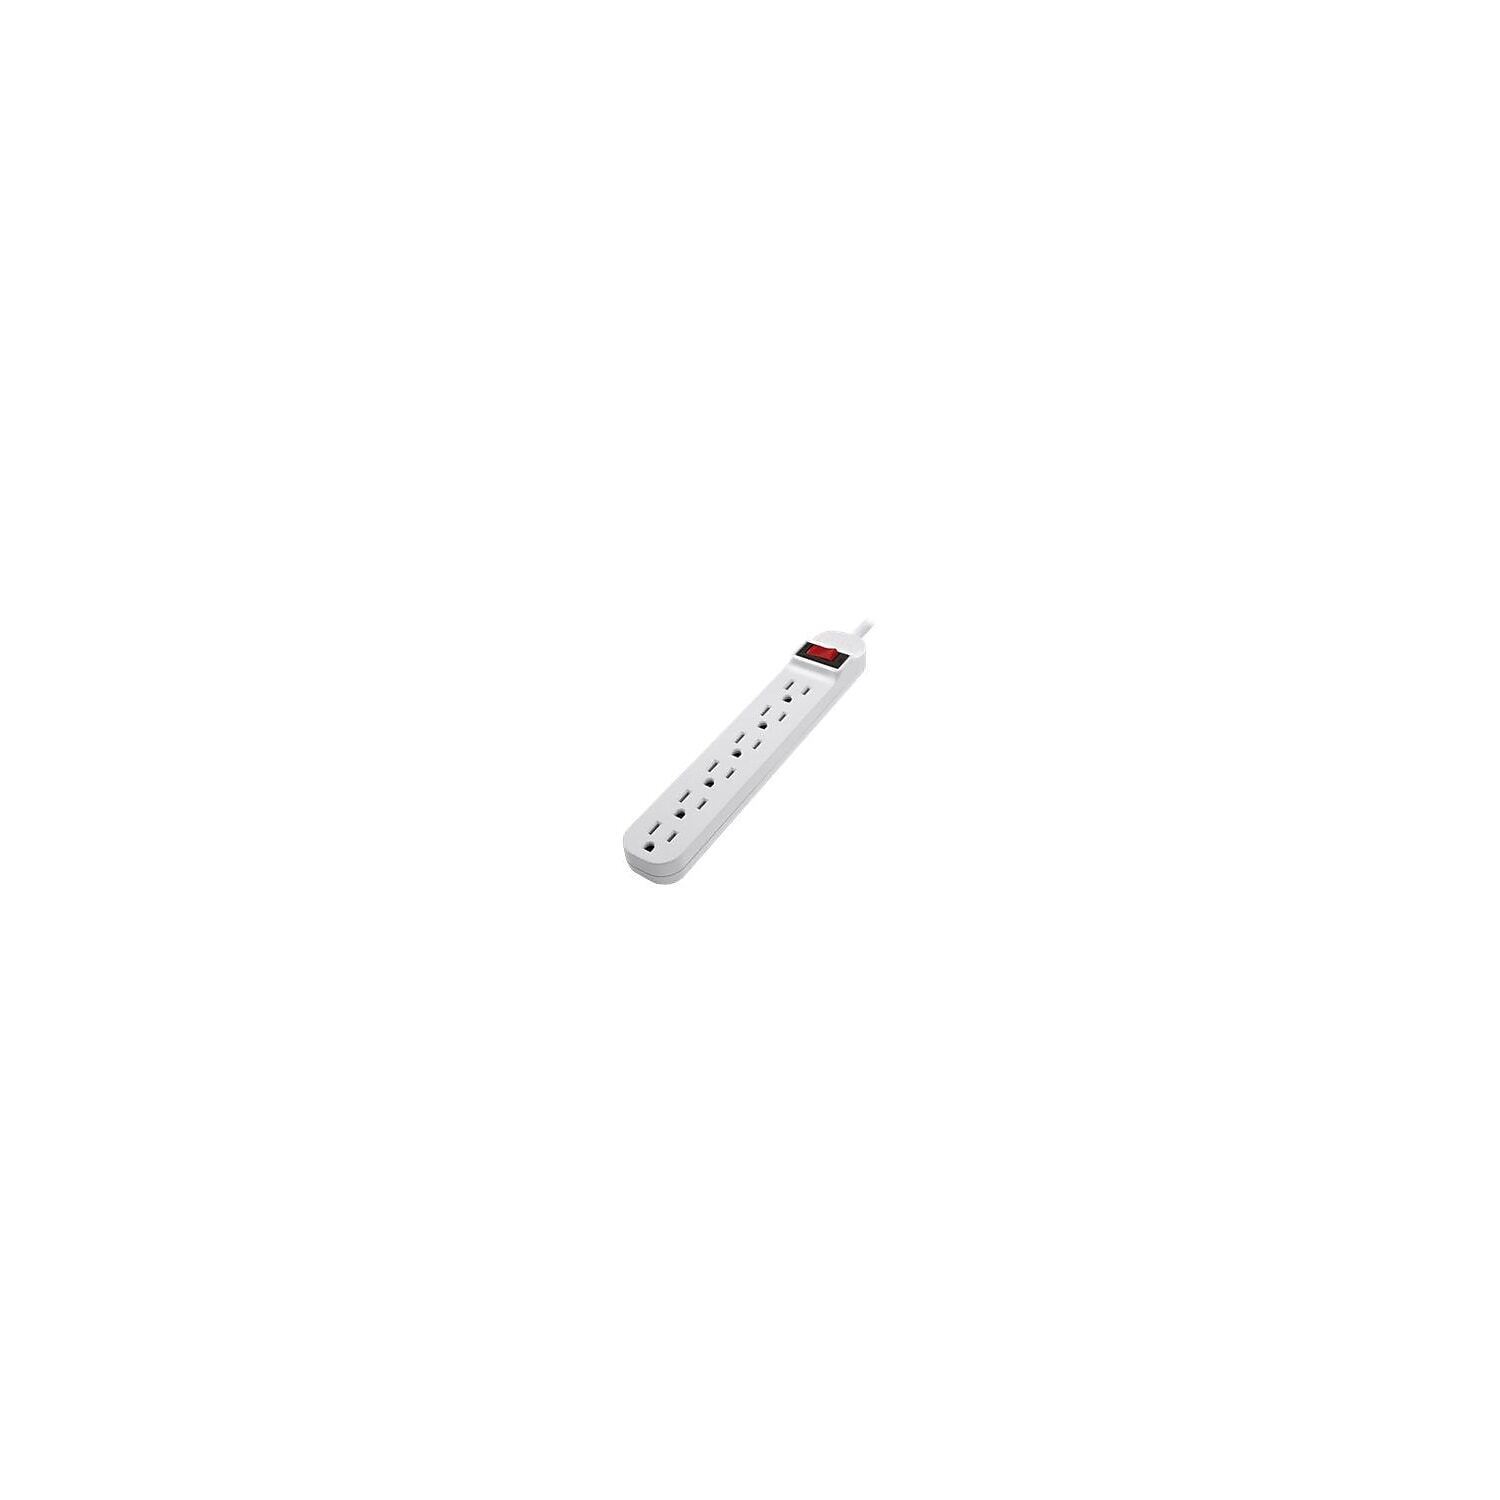 Belkin 6 Outlet Power Strip White (F9P609-03) F9P60903DP